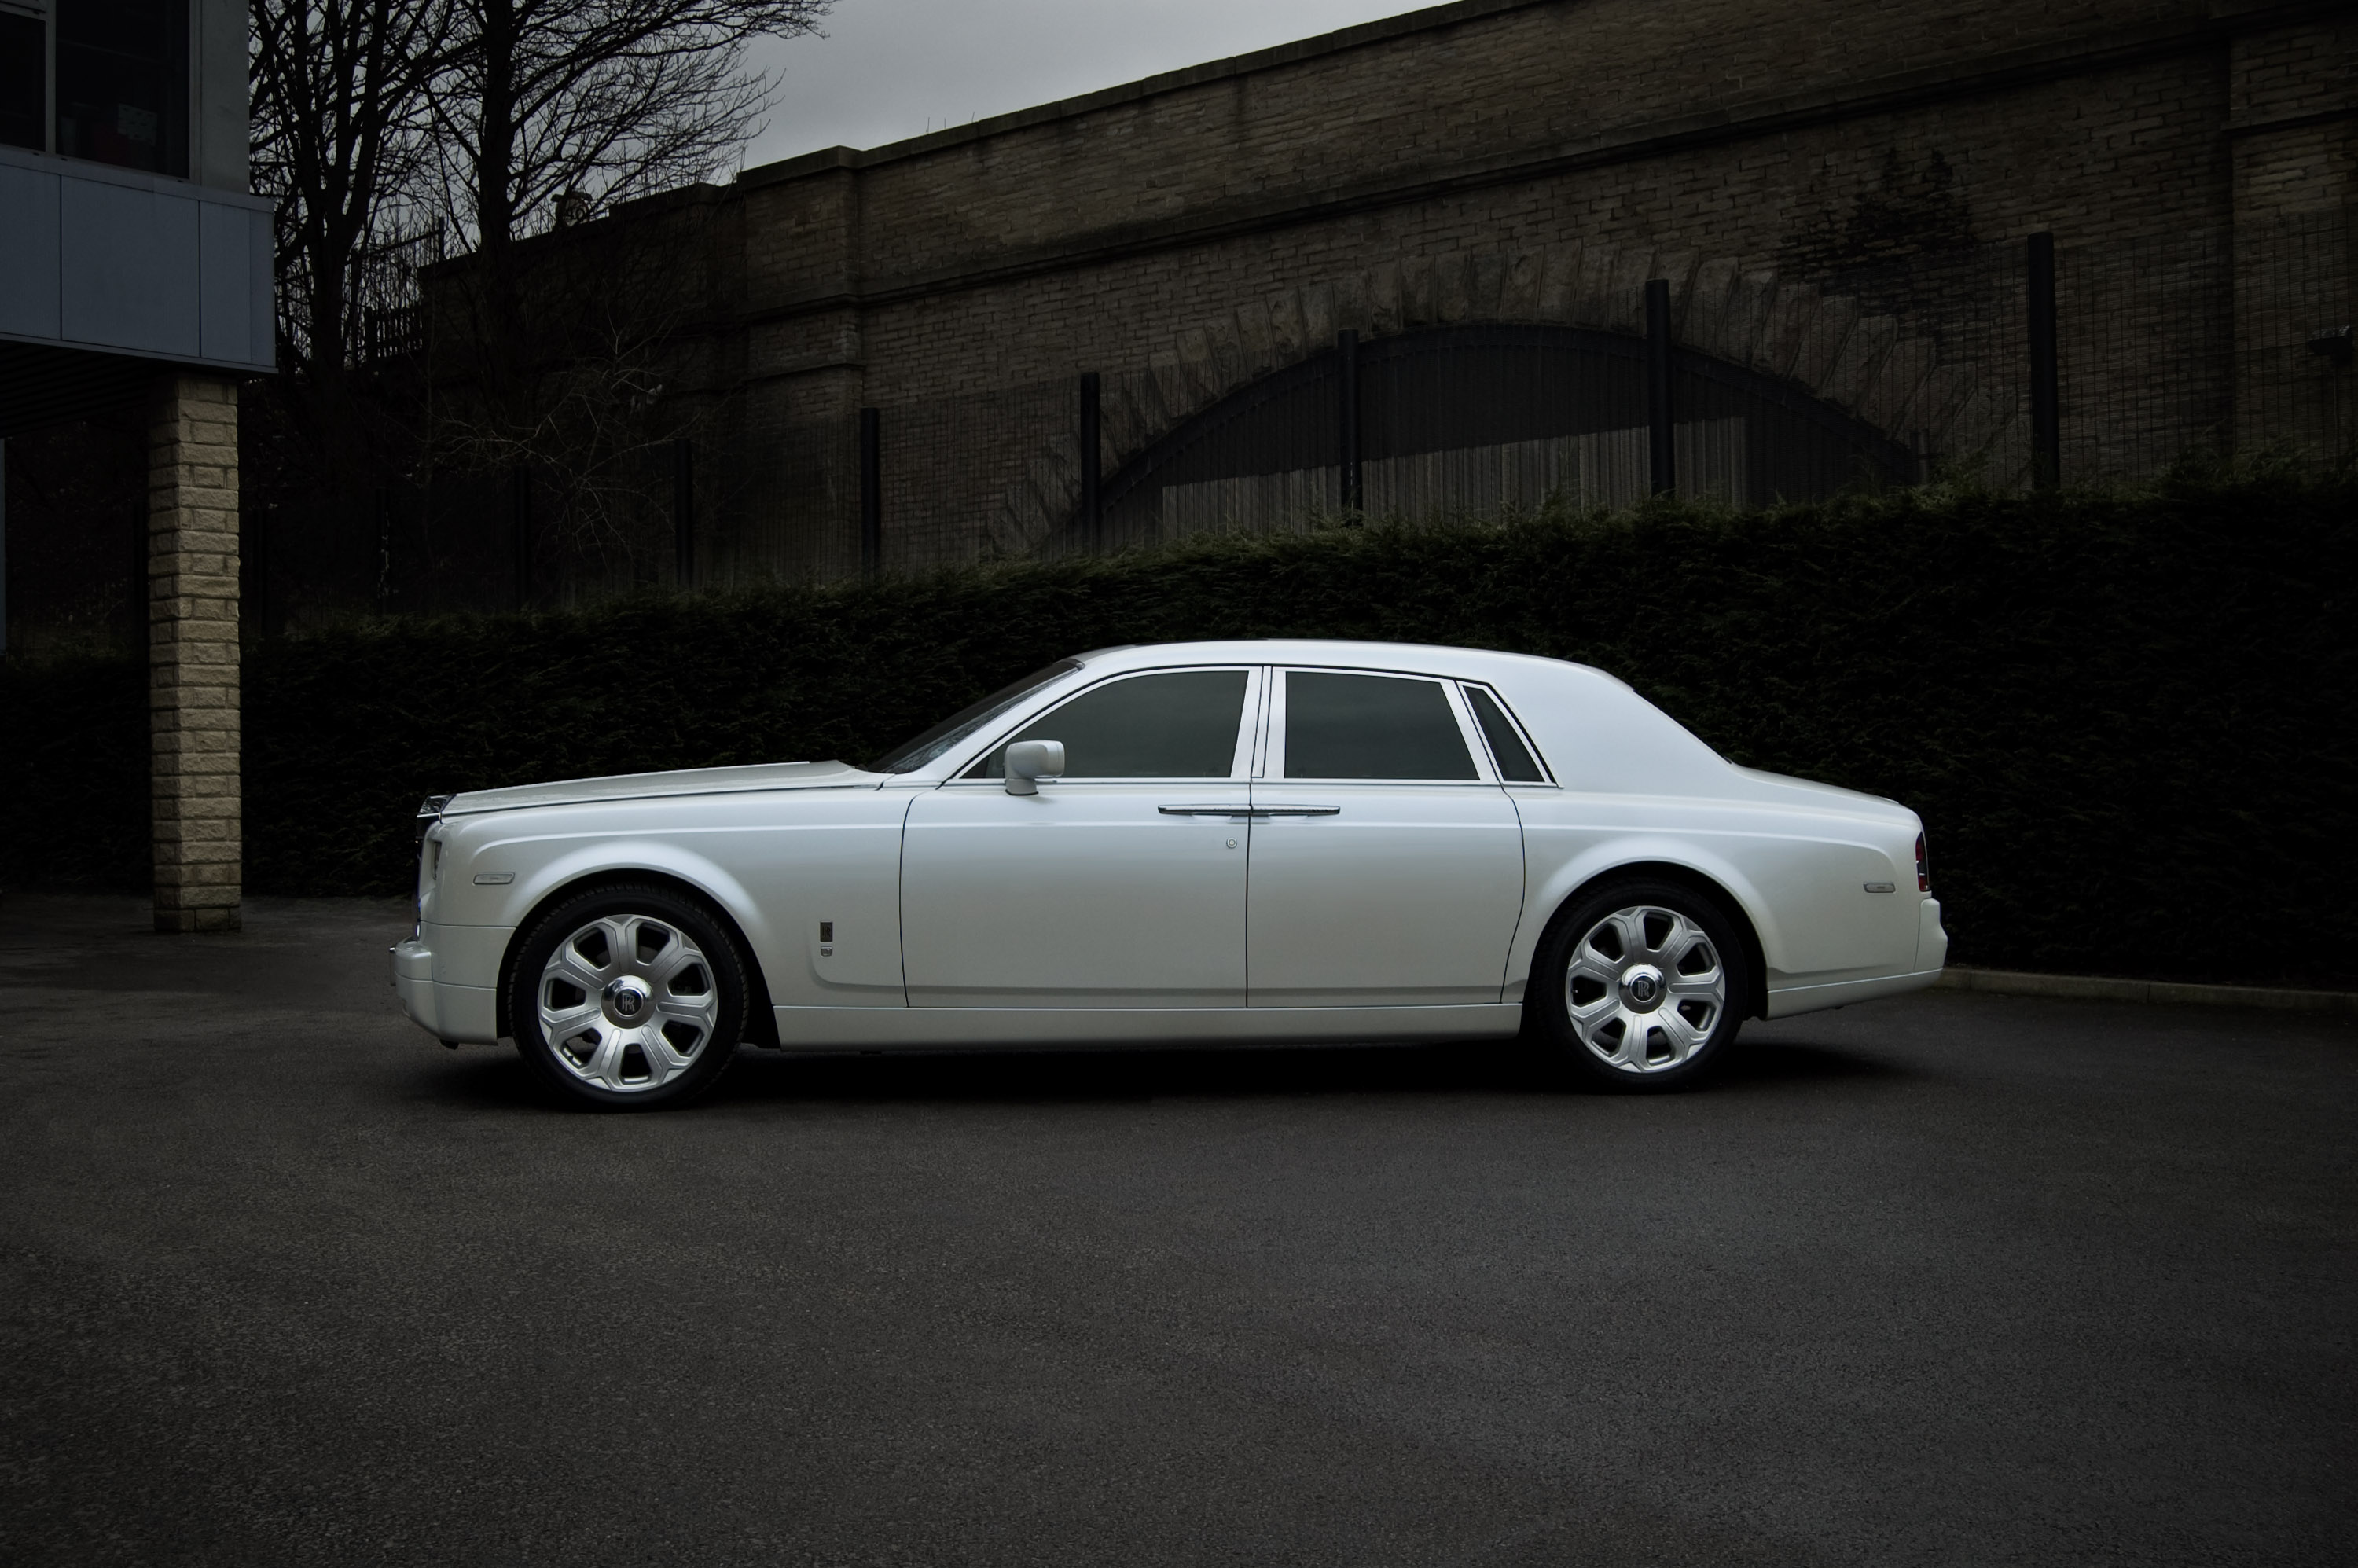 Project Kahn Pearl White Rolls Royce Phantom